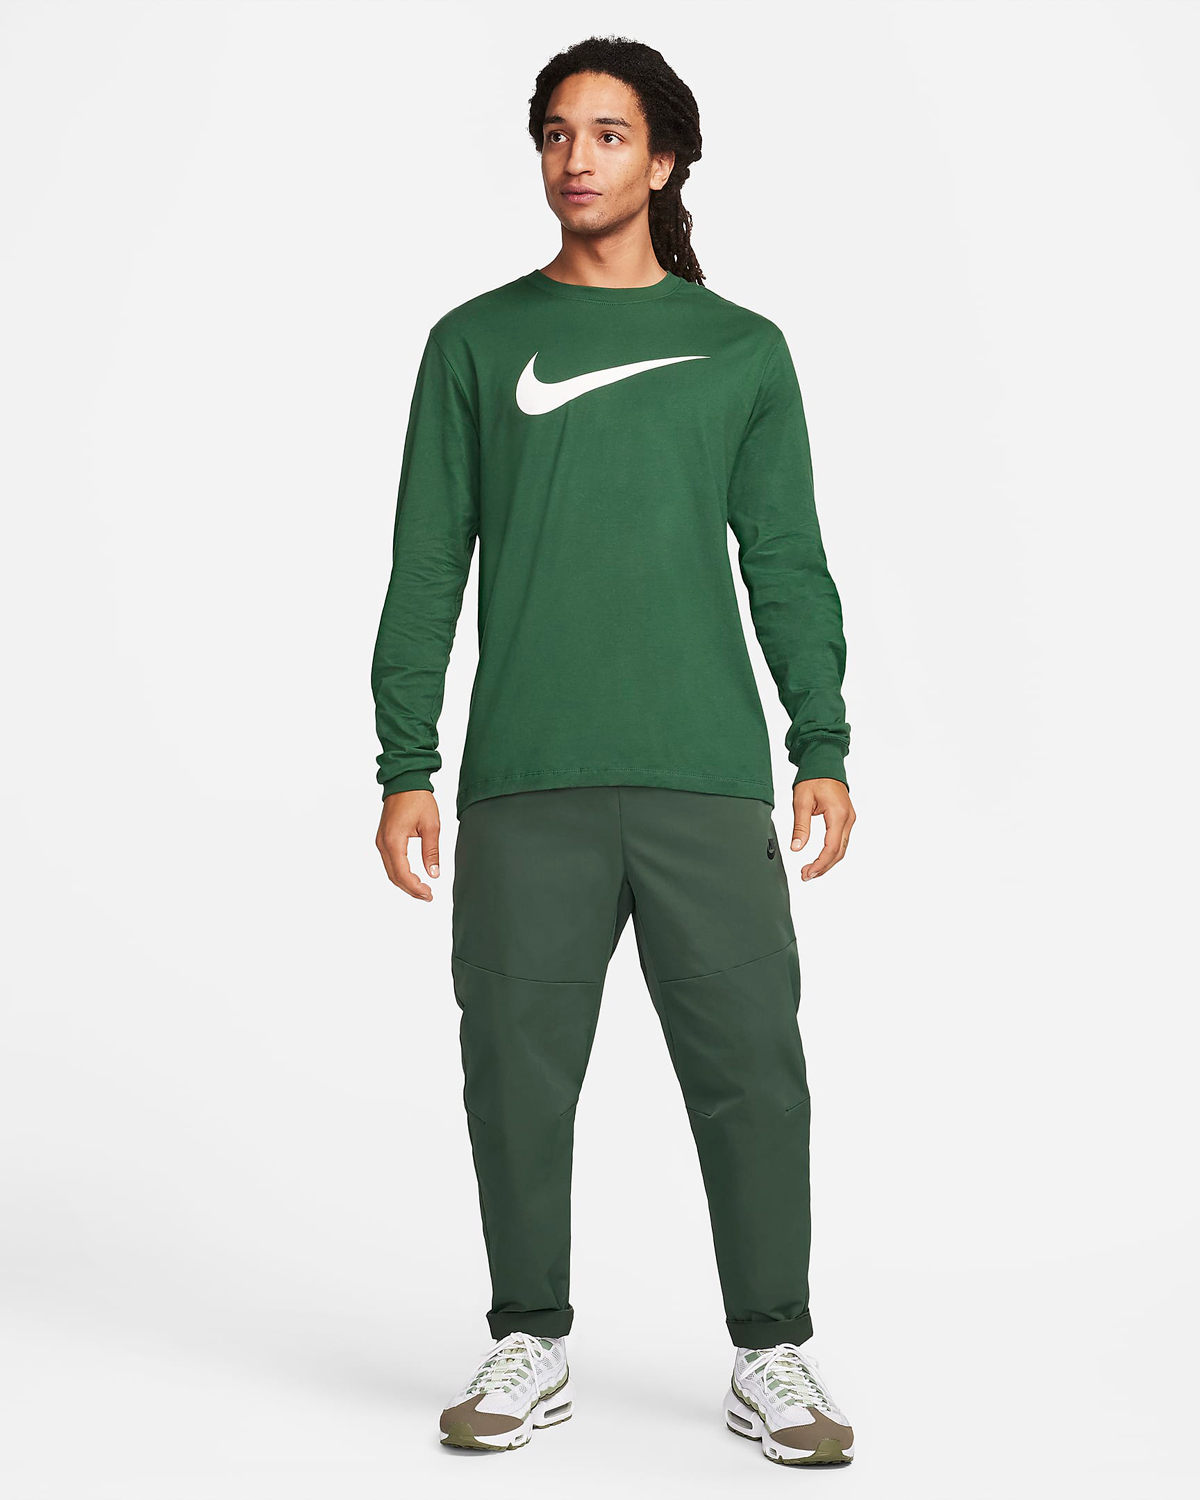 Nike-Sportswear-Swoosh-Long-Sleeve-T-Shirt-Fir-Green-Outfit